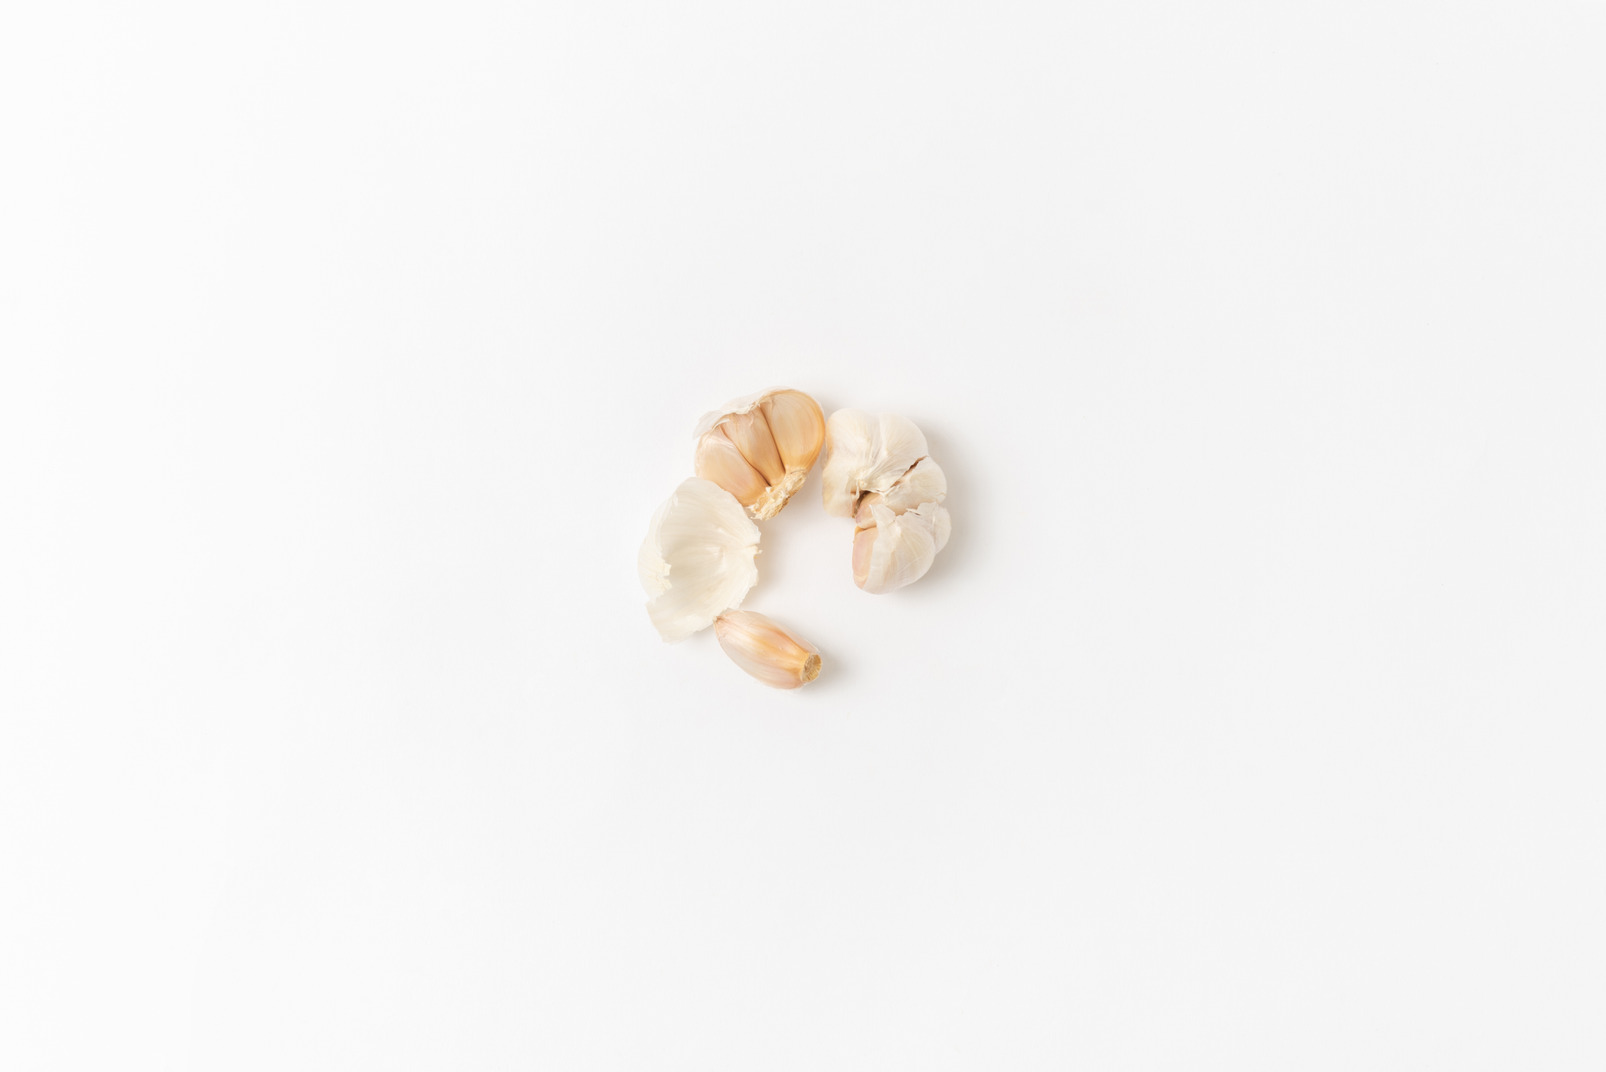 Garlic helps to open a real taste of ingredients